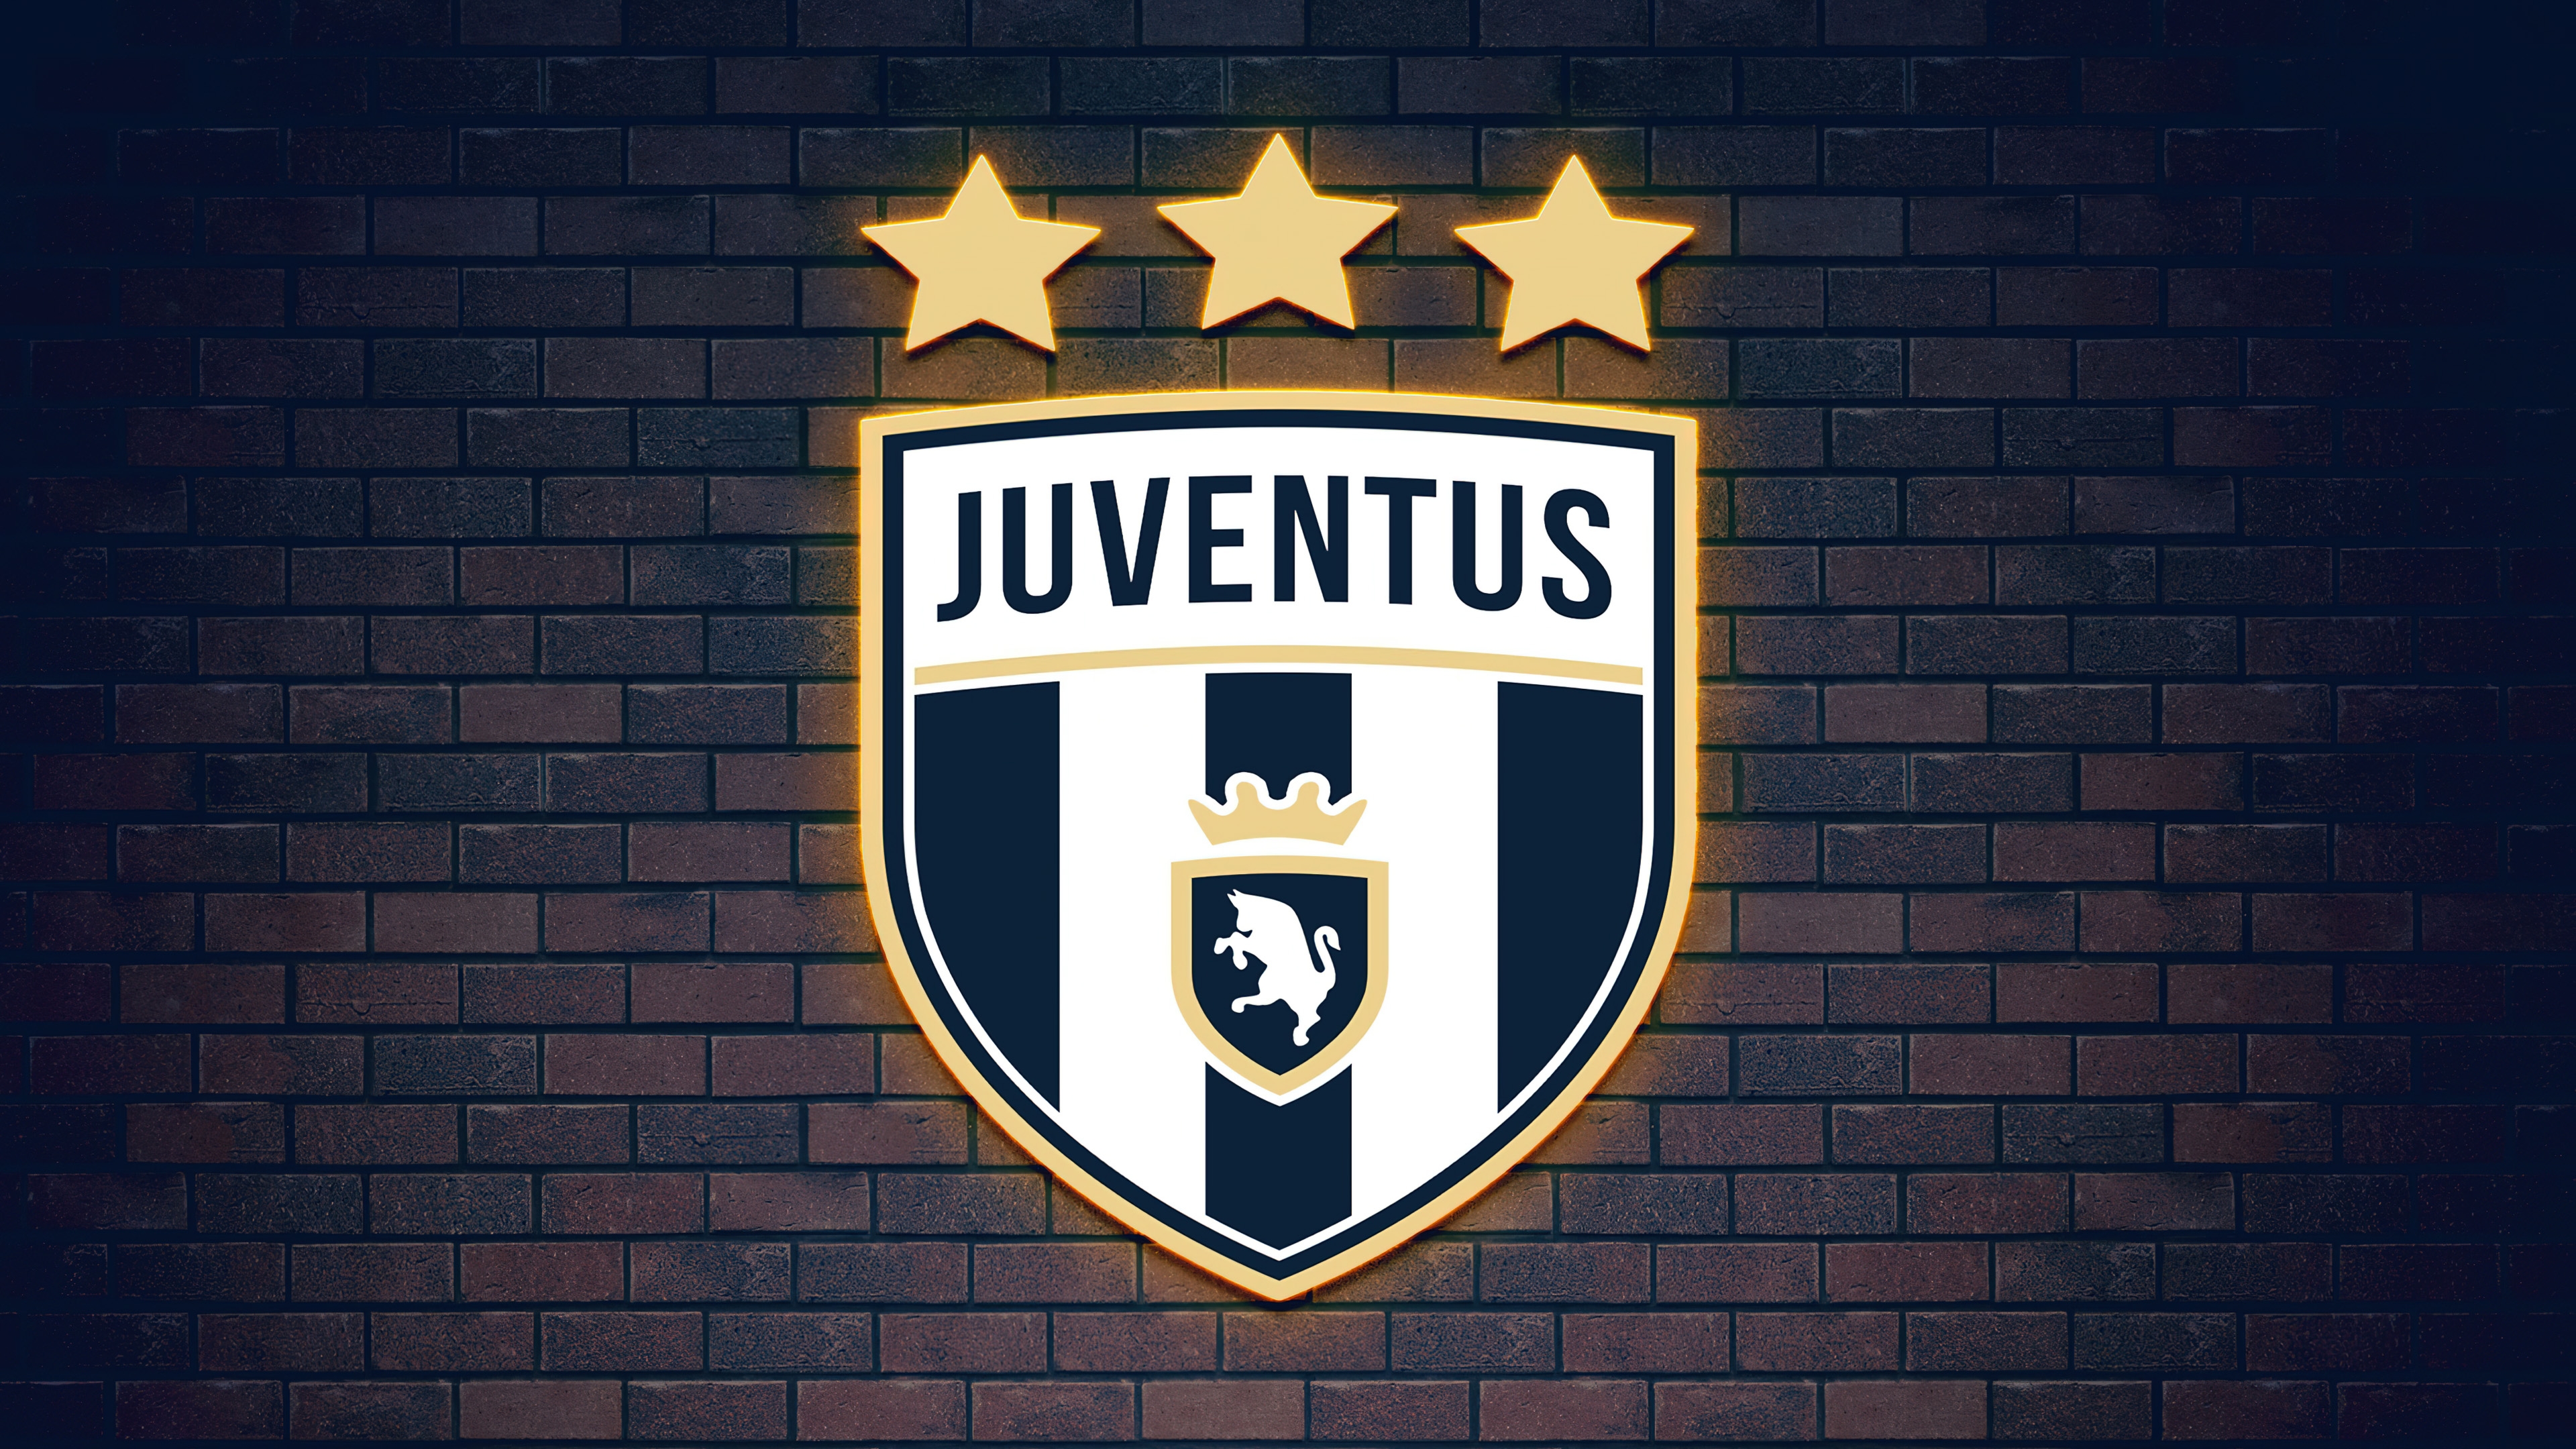 HD wallpaper, Juventus Fc, Football Club, Brick Wall